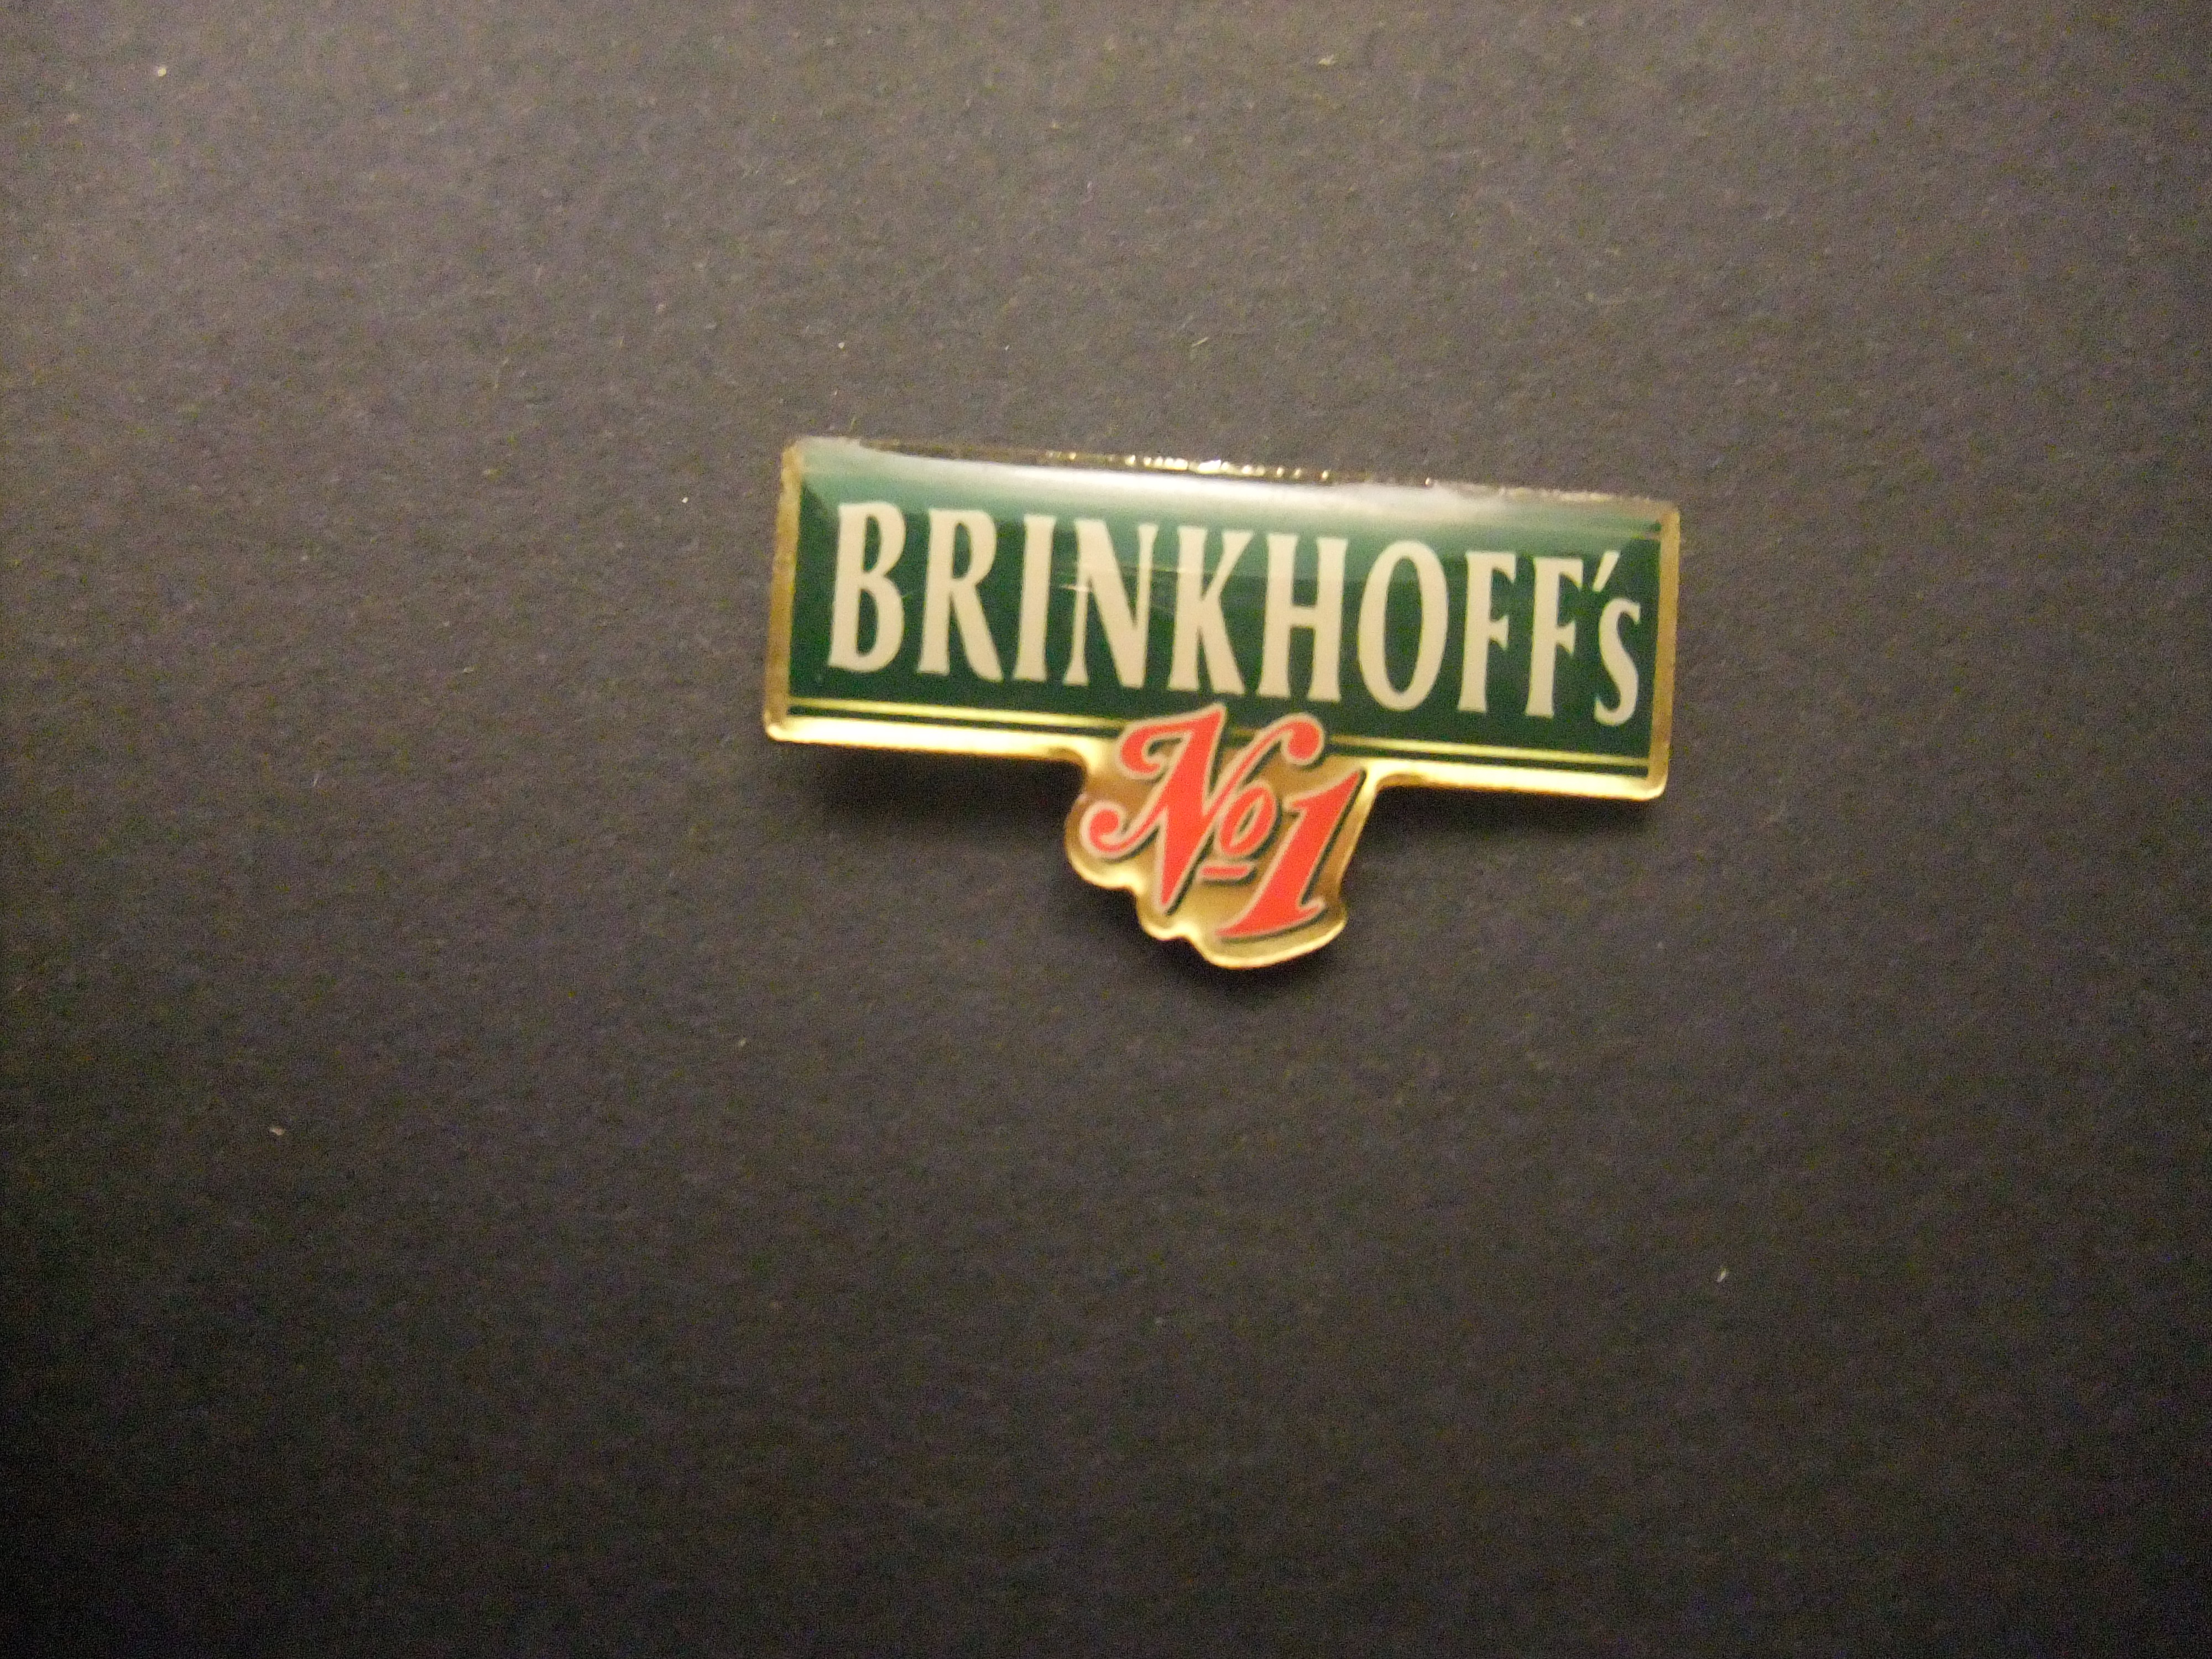 Brinkhoff's Premium No1 Pilsener ( Duits bier)